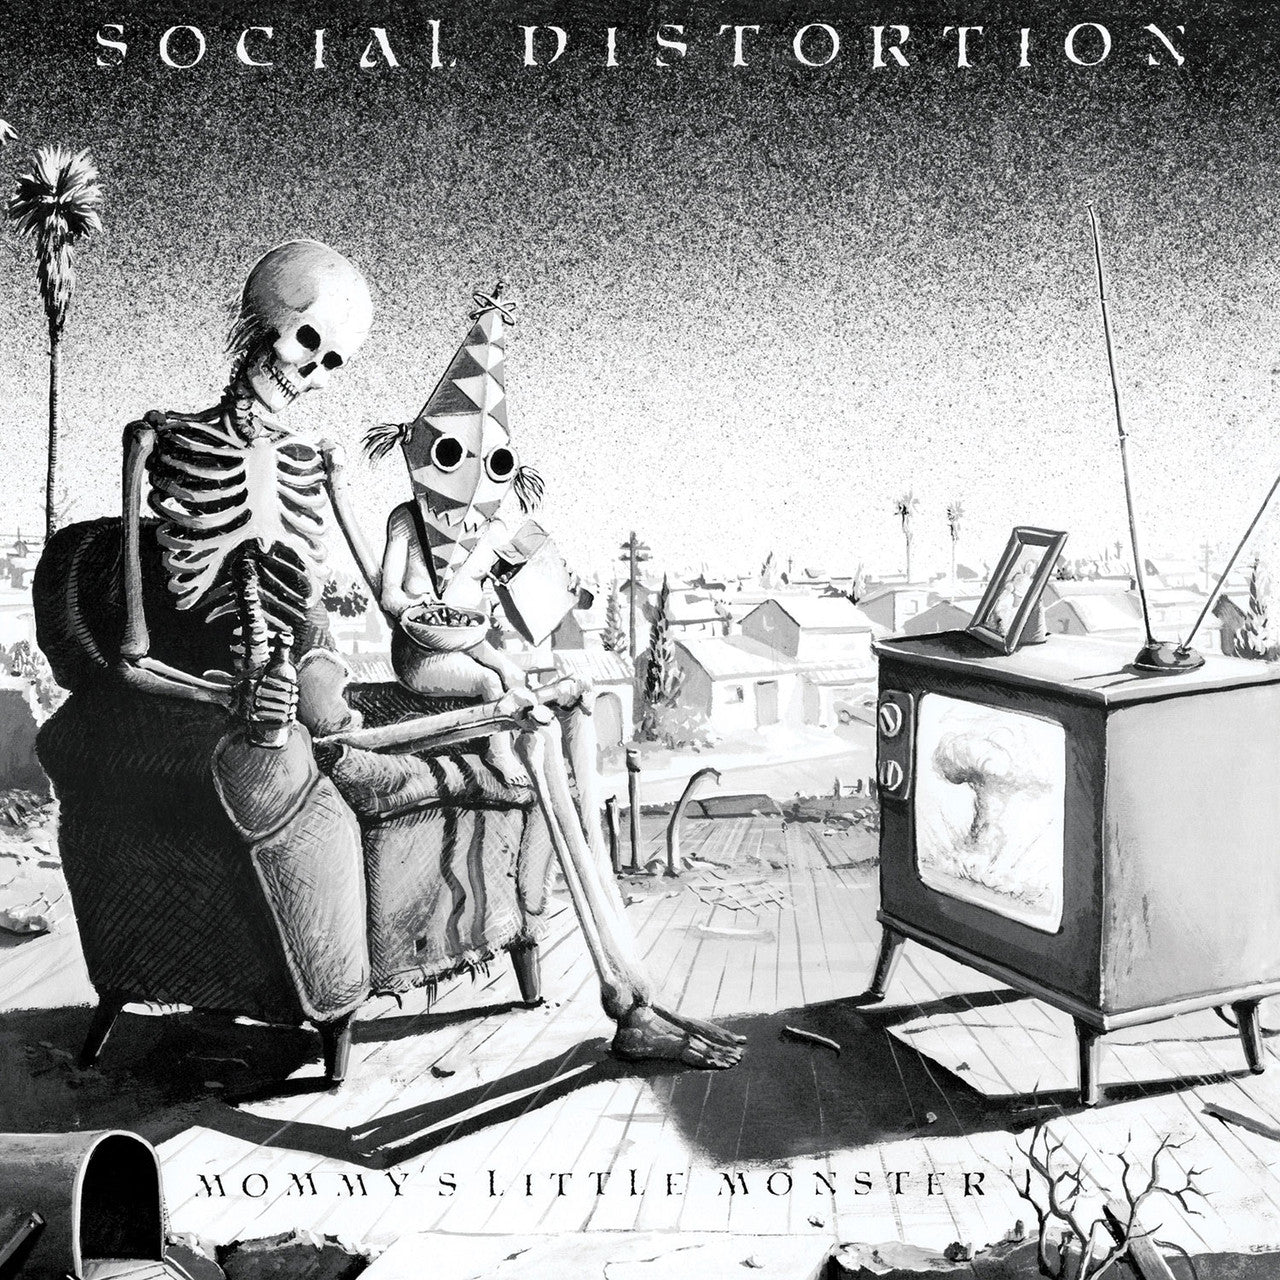 Social Distortion "Mommy's Little Monster" [40th Anniversary]